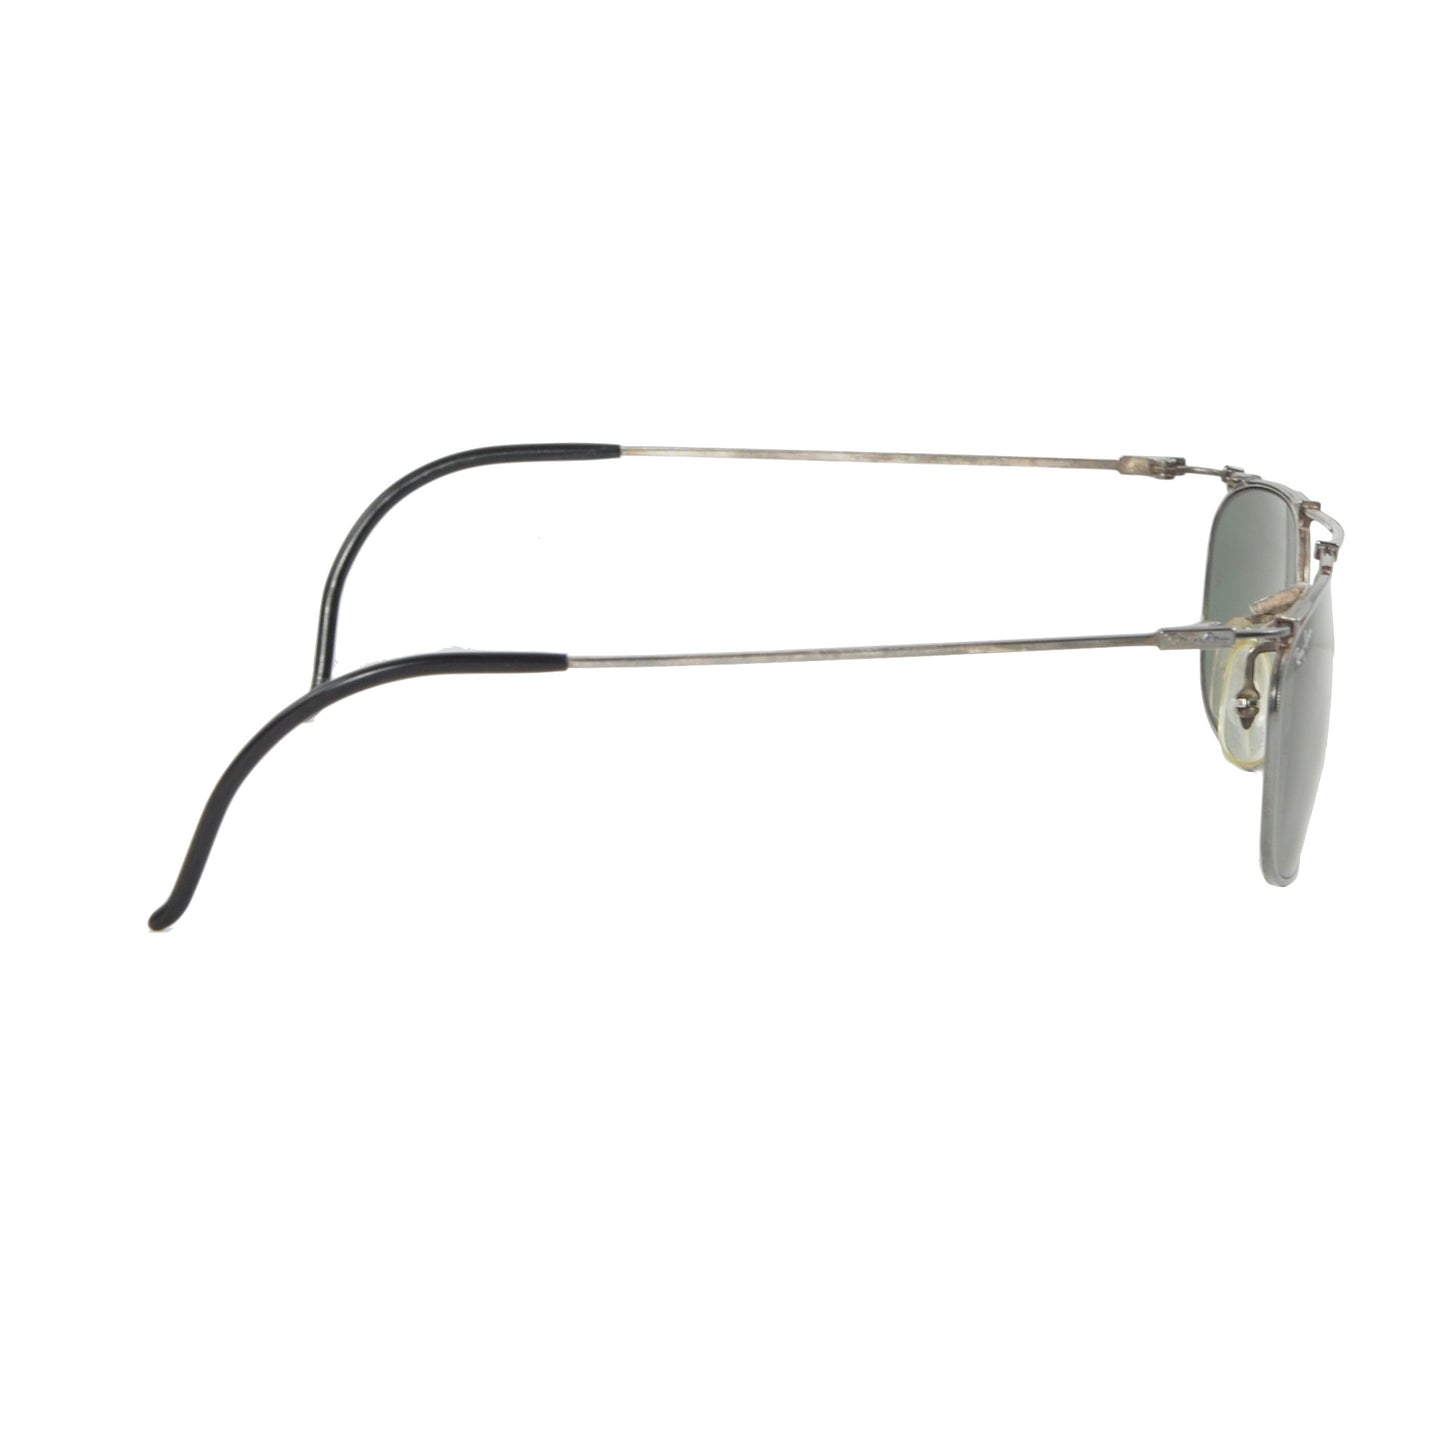 Bausch &amp; Lomb Ray-Ban Sonnenbrille W1532 - Stahlgrau